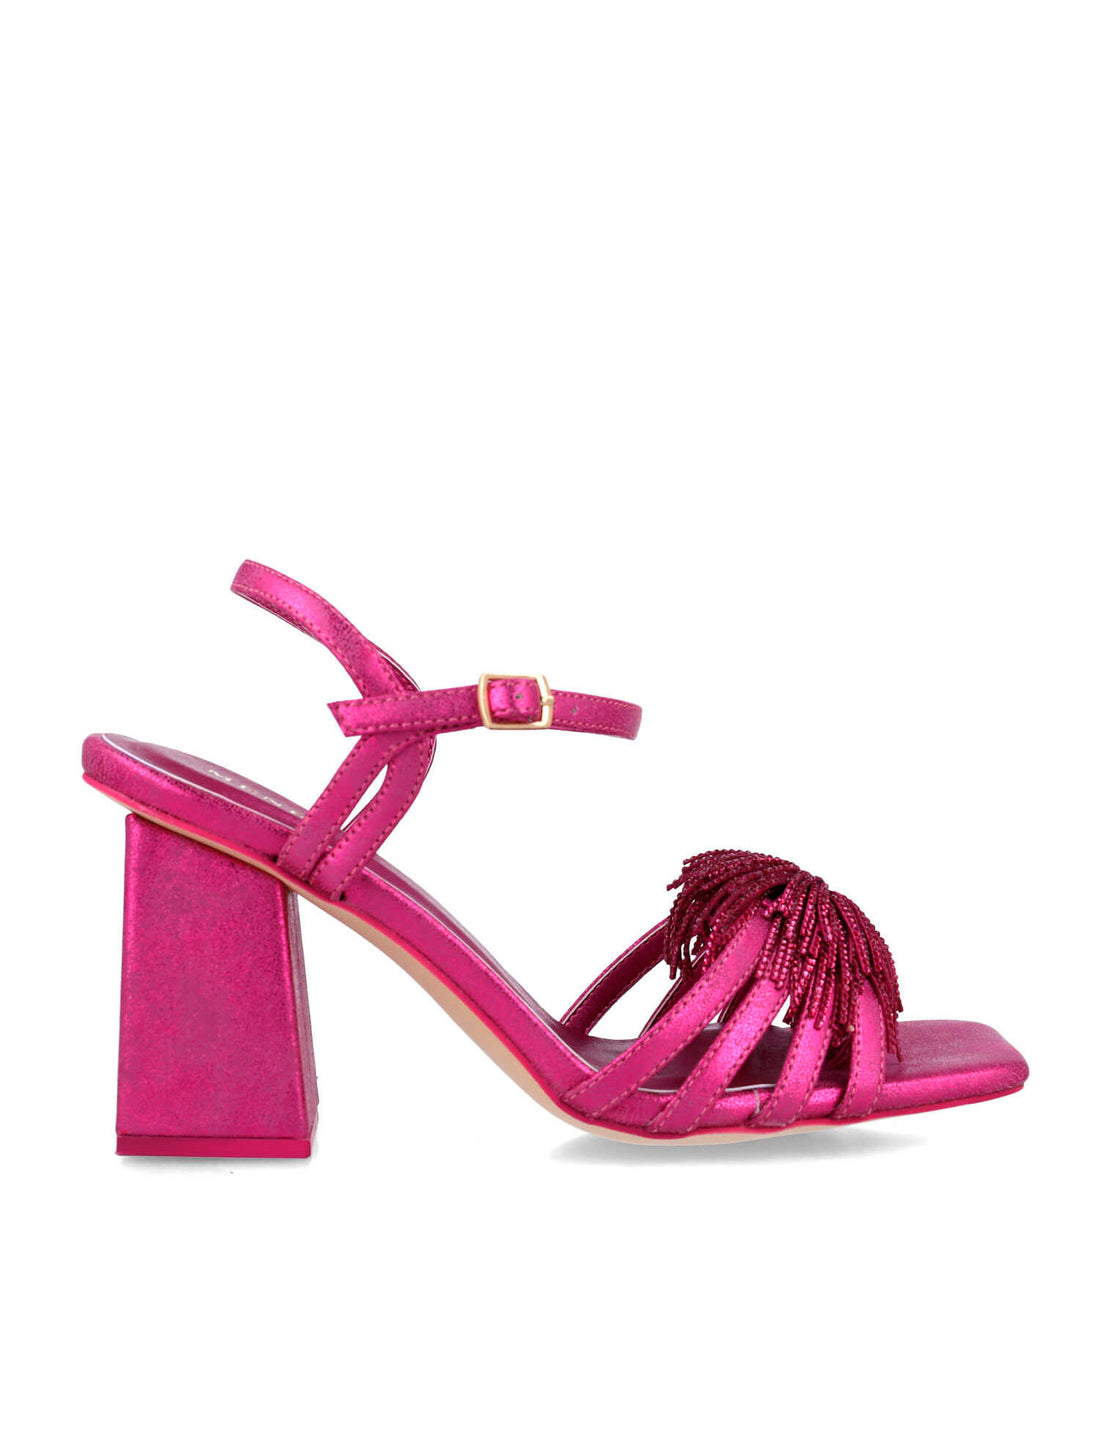 Pink High-Heel Sandals With Fringe Piece_25412_33_01